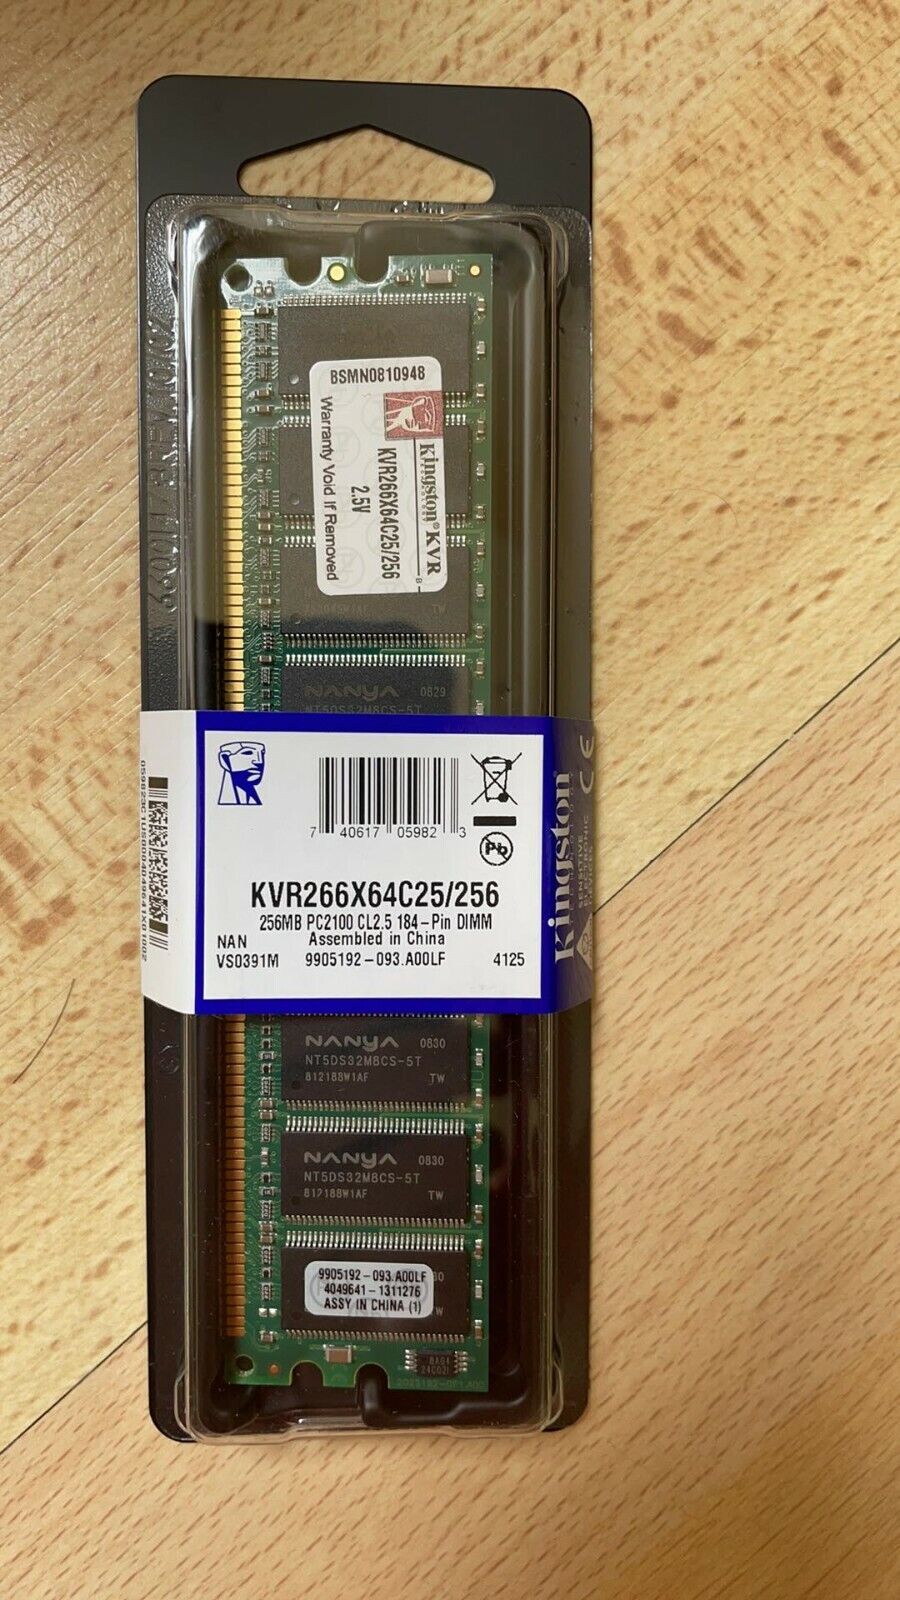 BRAND NEW Unopened Kingston KVR266X64C25/256 DDR266 256MB RAM 